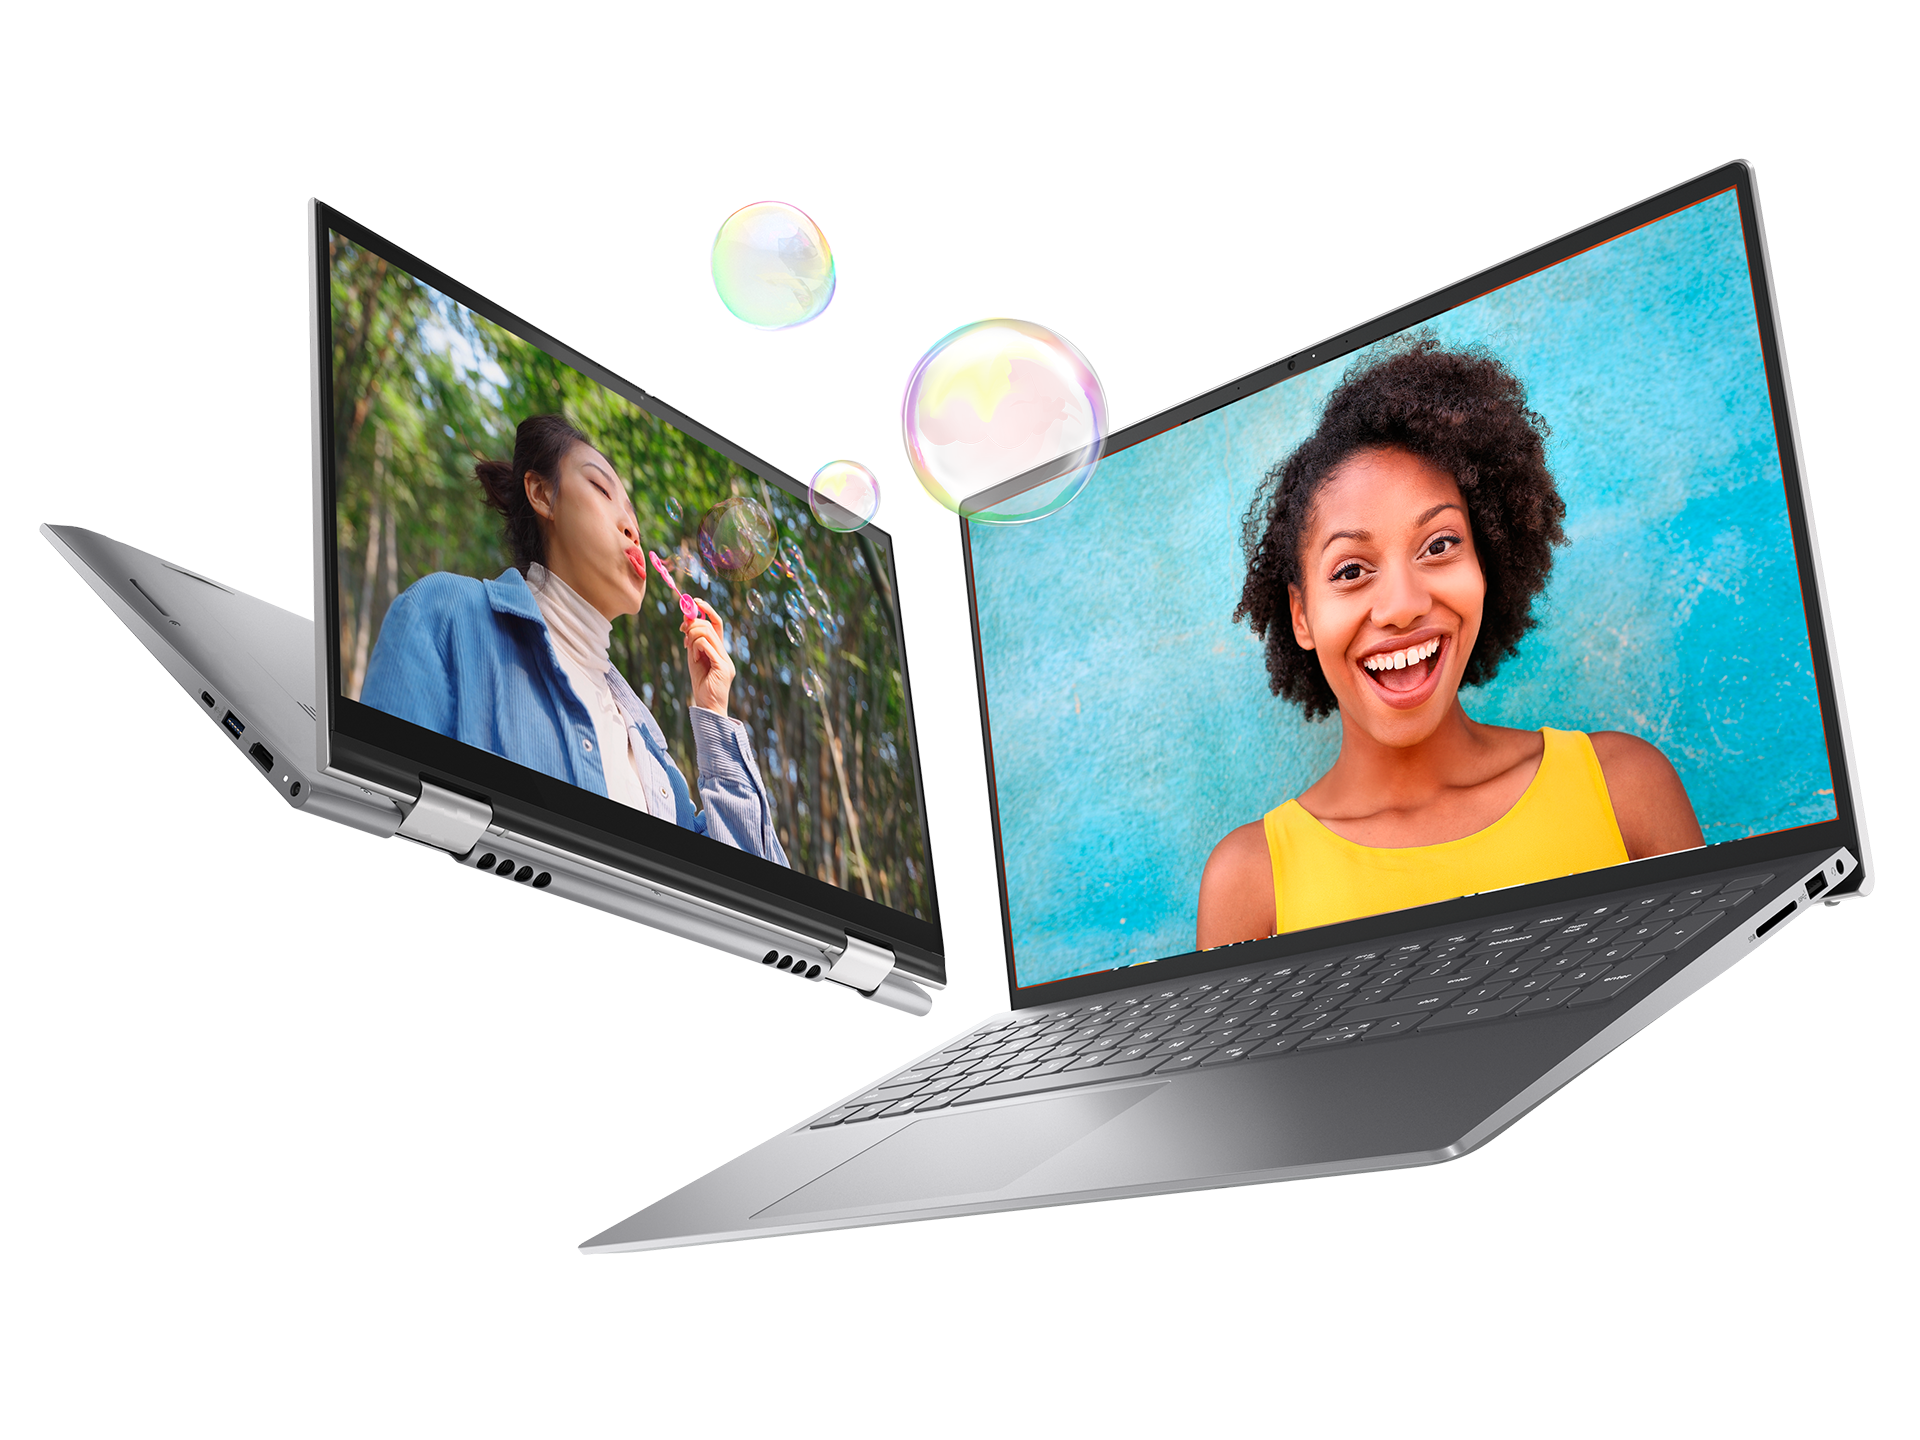 Dell Inspiron Laptops - Dell Laptops & Notebooks | Dell USA